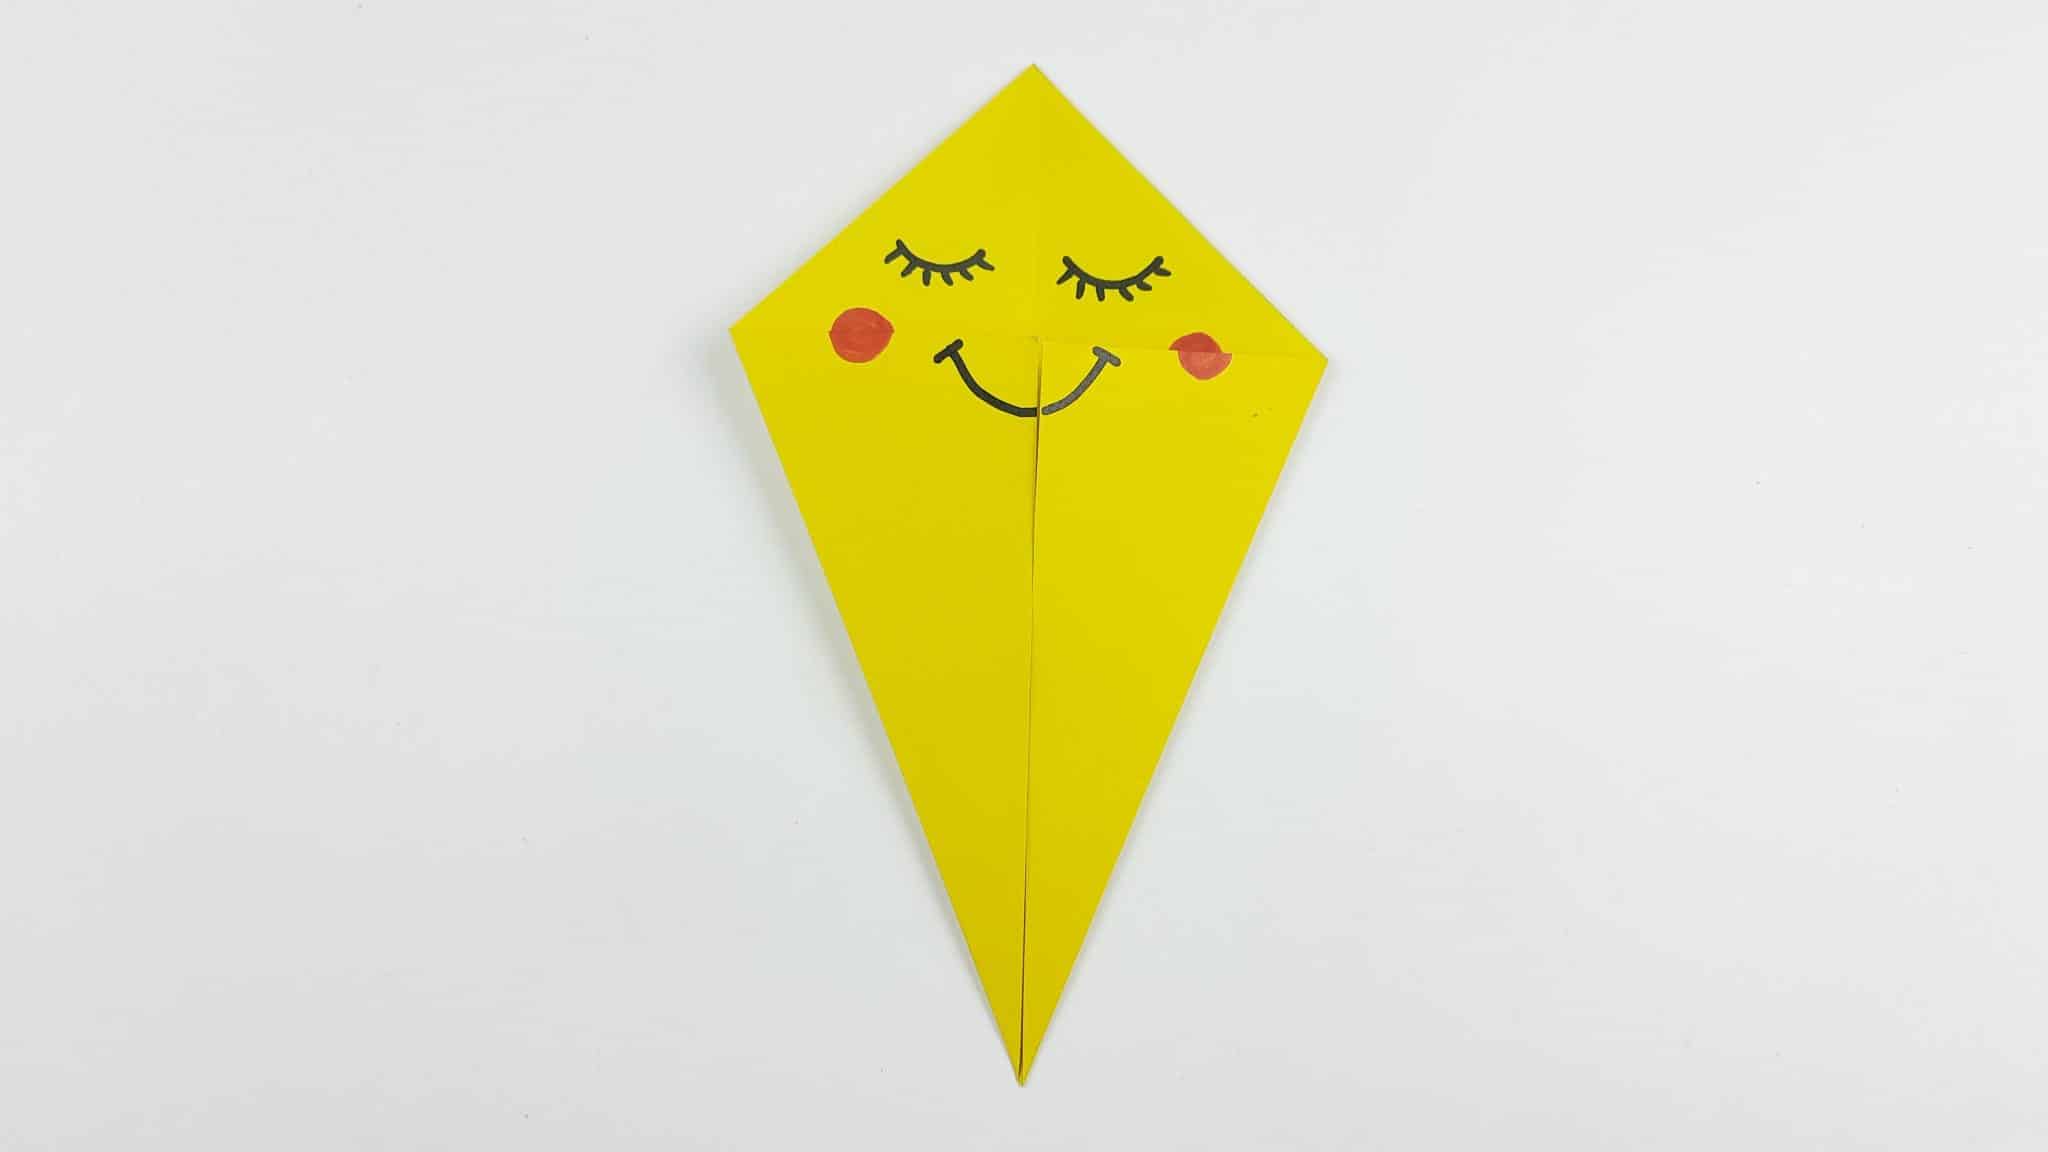 Kite Paper - What's Best For Making Kites?